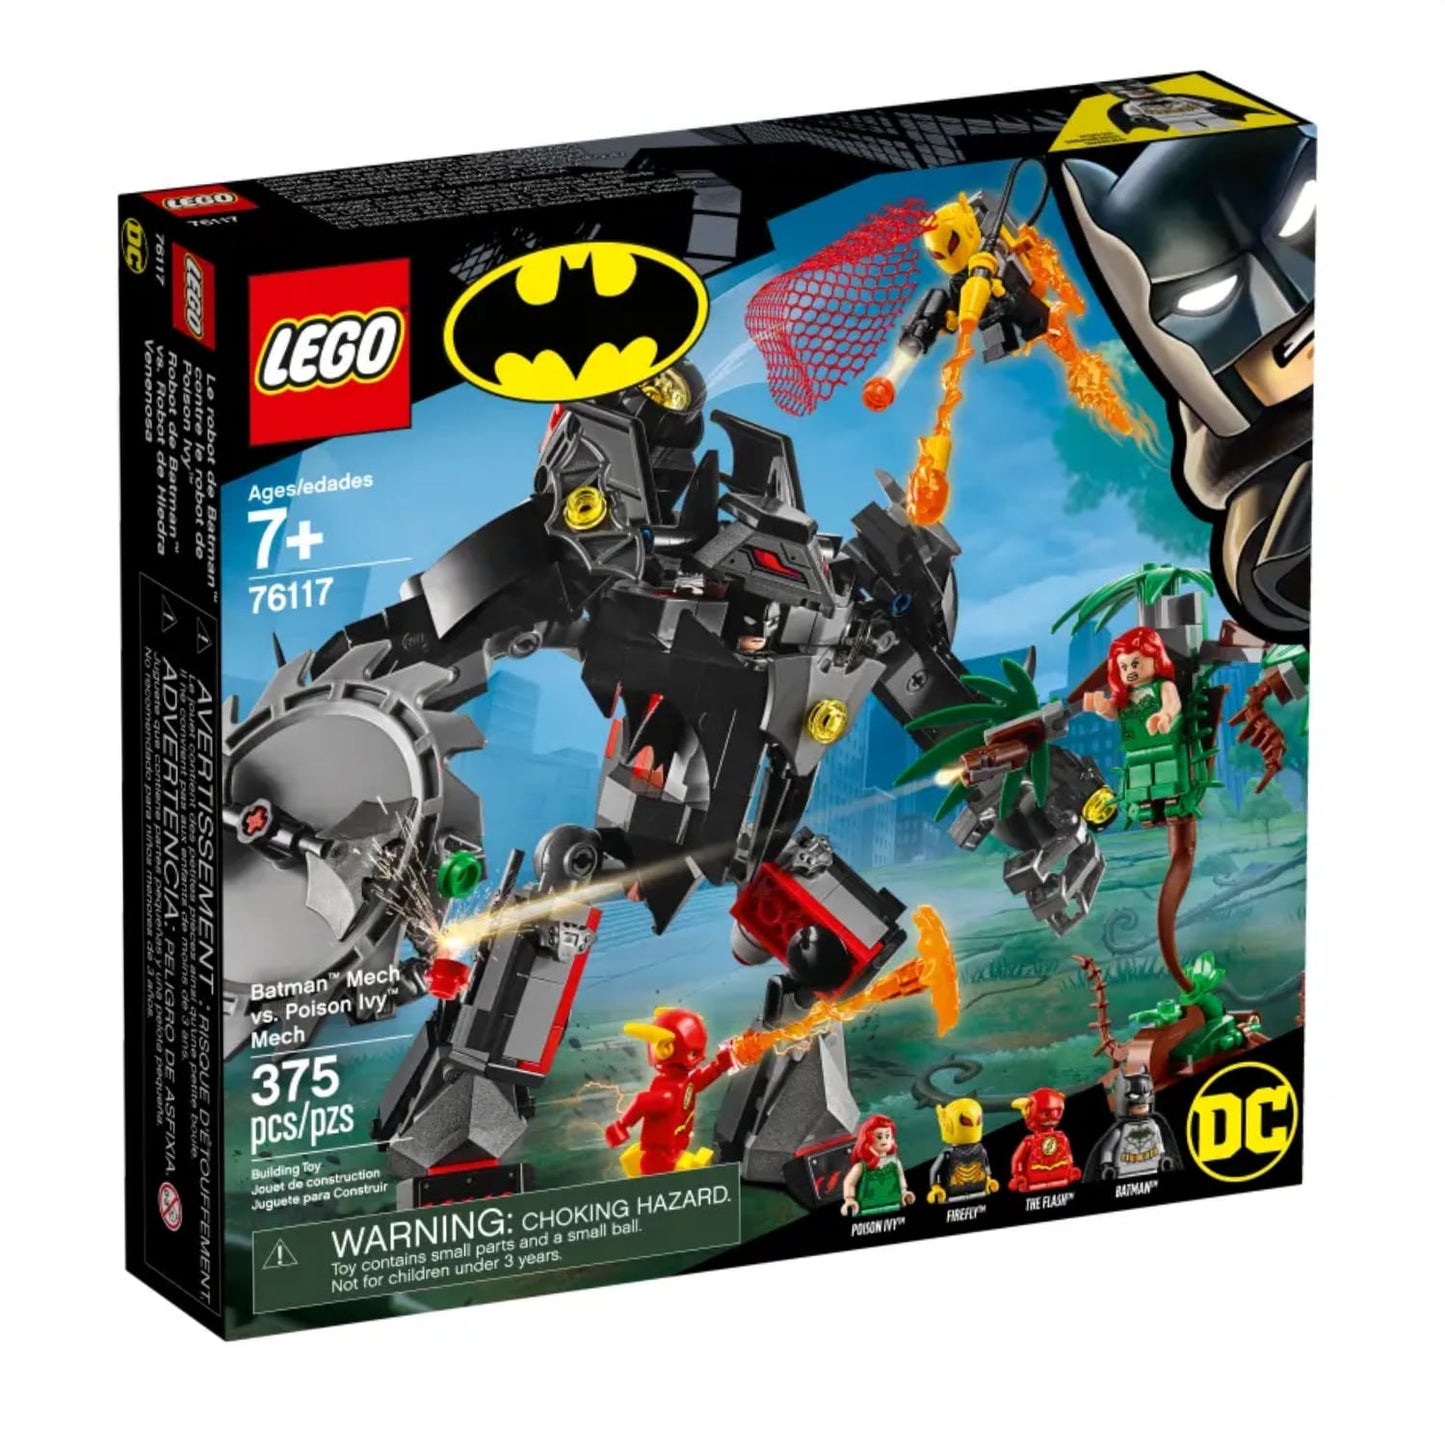 Lego 76117 DC Batman Batman Mech vs. Poison Ivy Mech